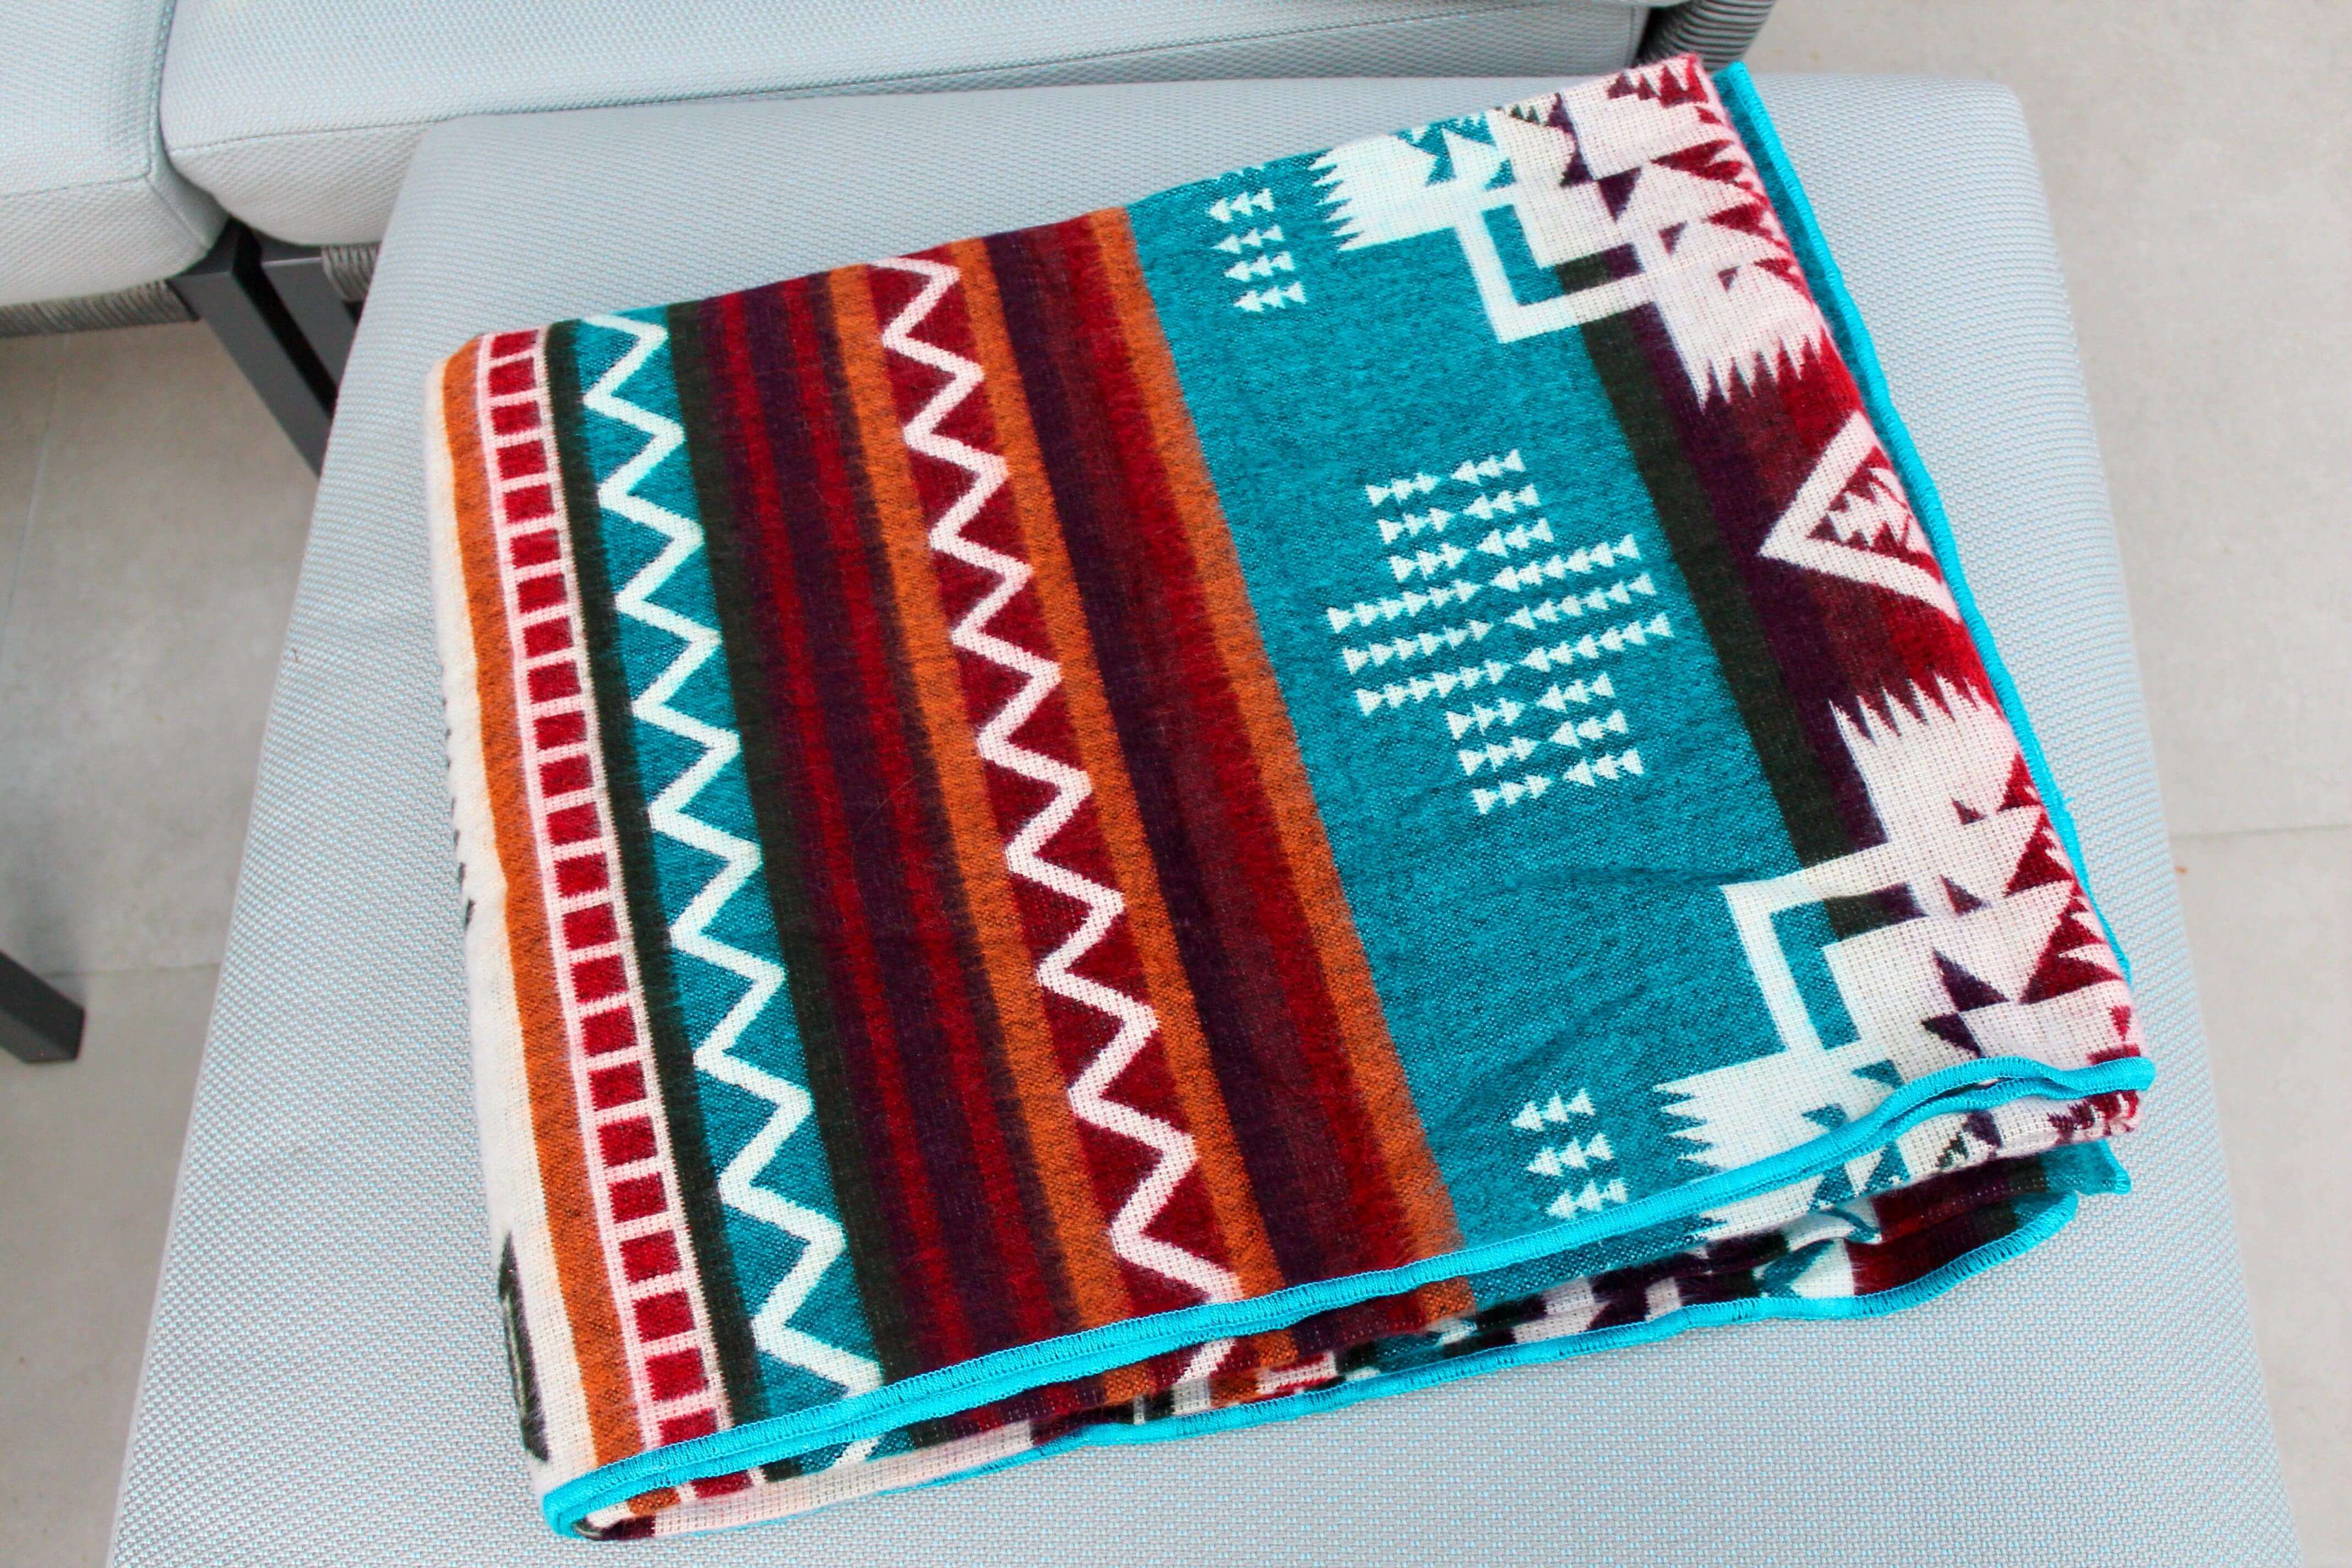 Folded alpaca blanket handmade by artisans